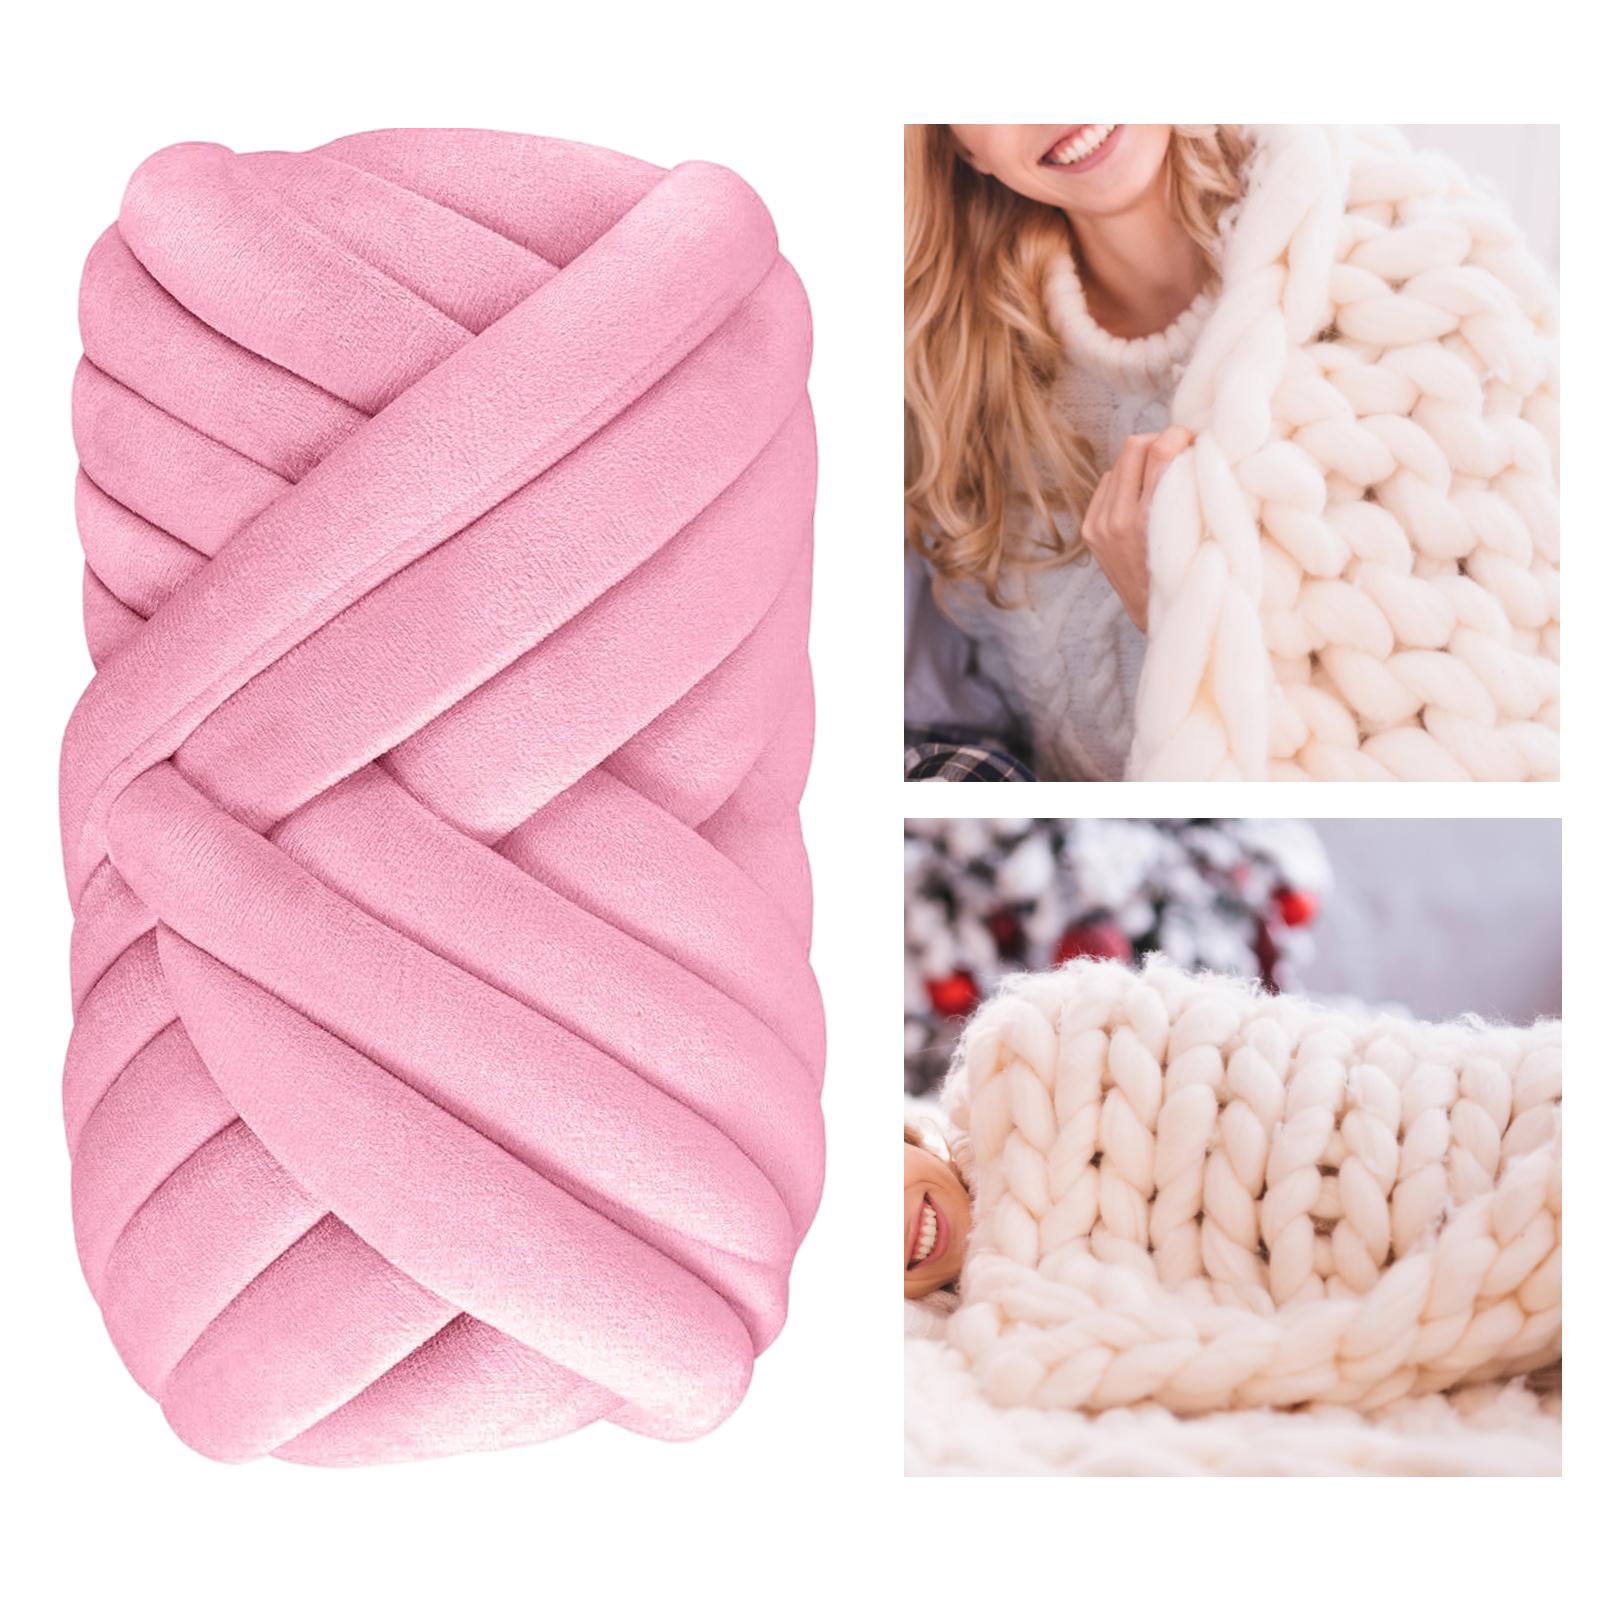 Thick Chunky Yarn, Chunky Wool Yarn, Soft Polyester Yarn, Arm Knitting Yarn, Weight Yarn, Knit Yarn for Knitted Blanket/ Sweater/ Weaving Macrame Rose